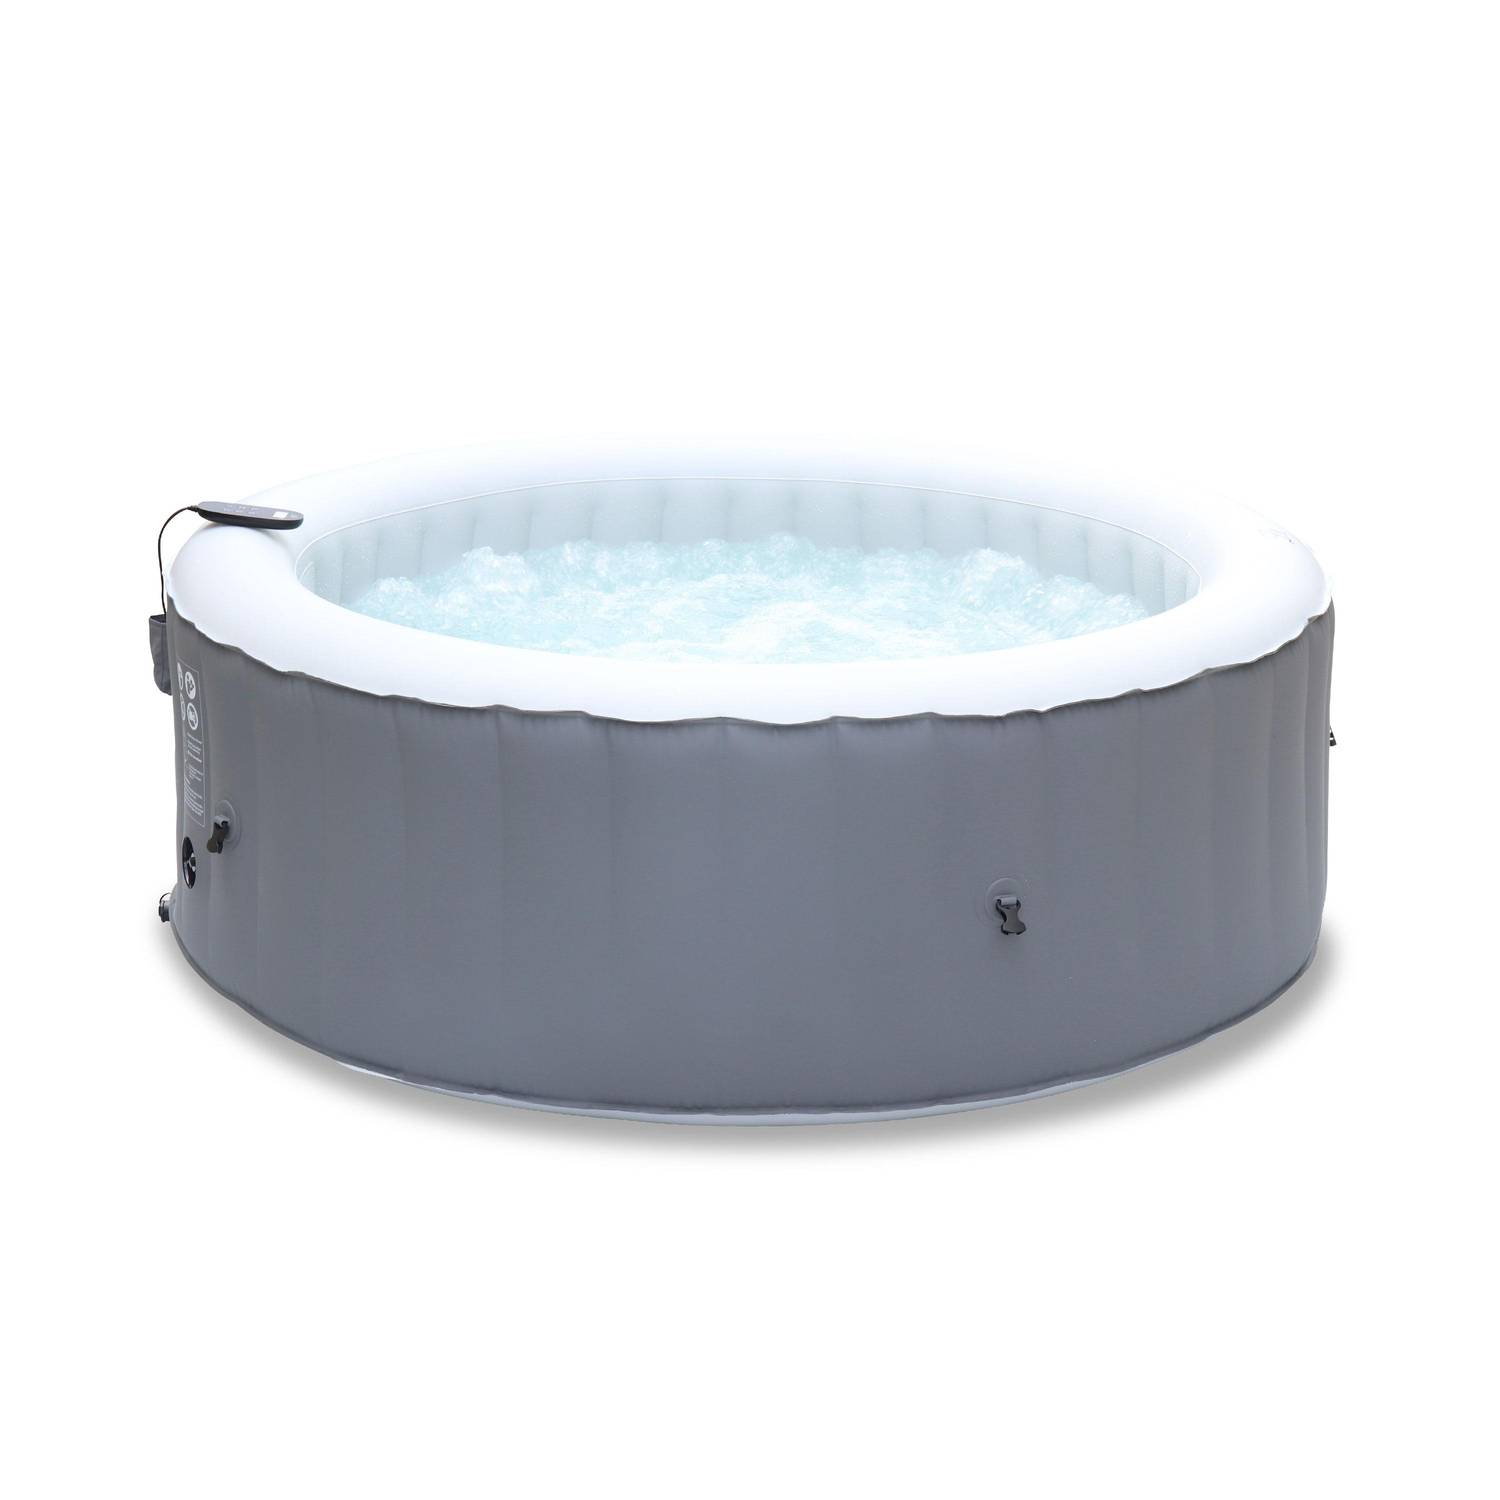  4-person round inflatable hot tub MSpa - Ø180cm round 4-person spa, PVC, pump, heater, filter, remote control - Kili 4 - Grey Photo1